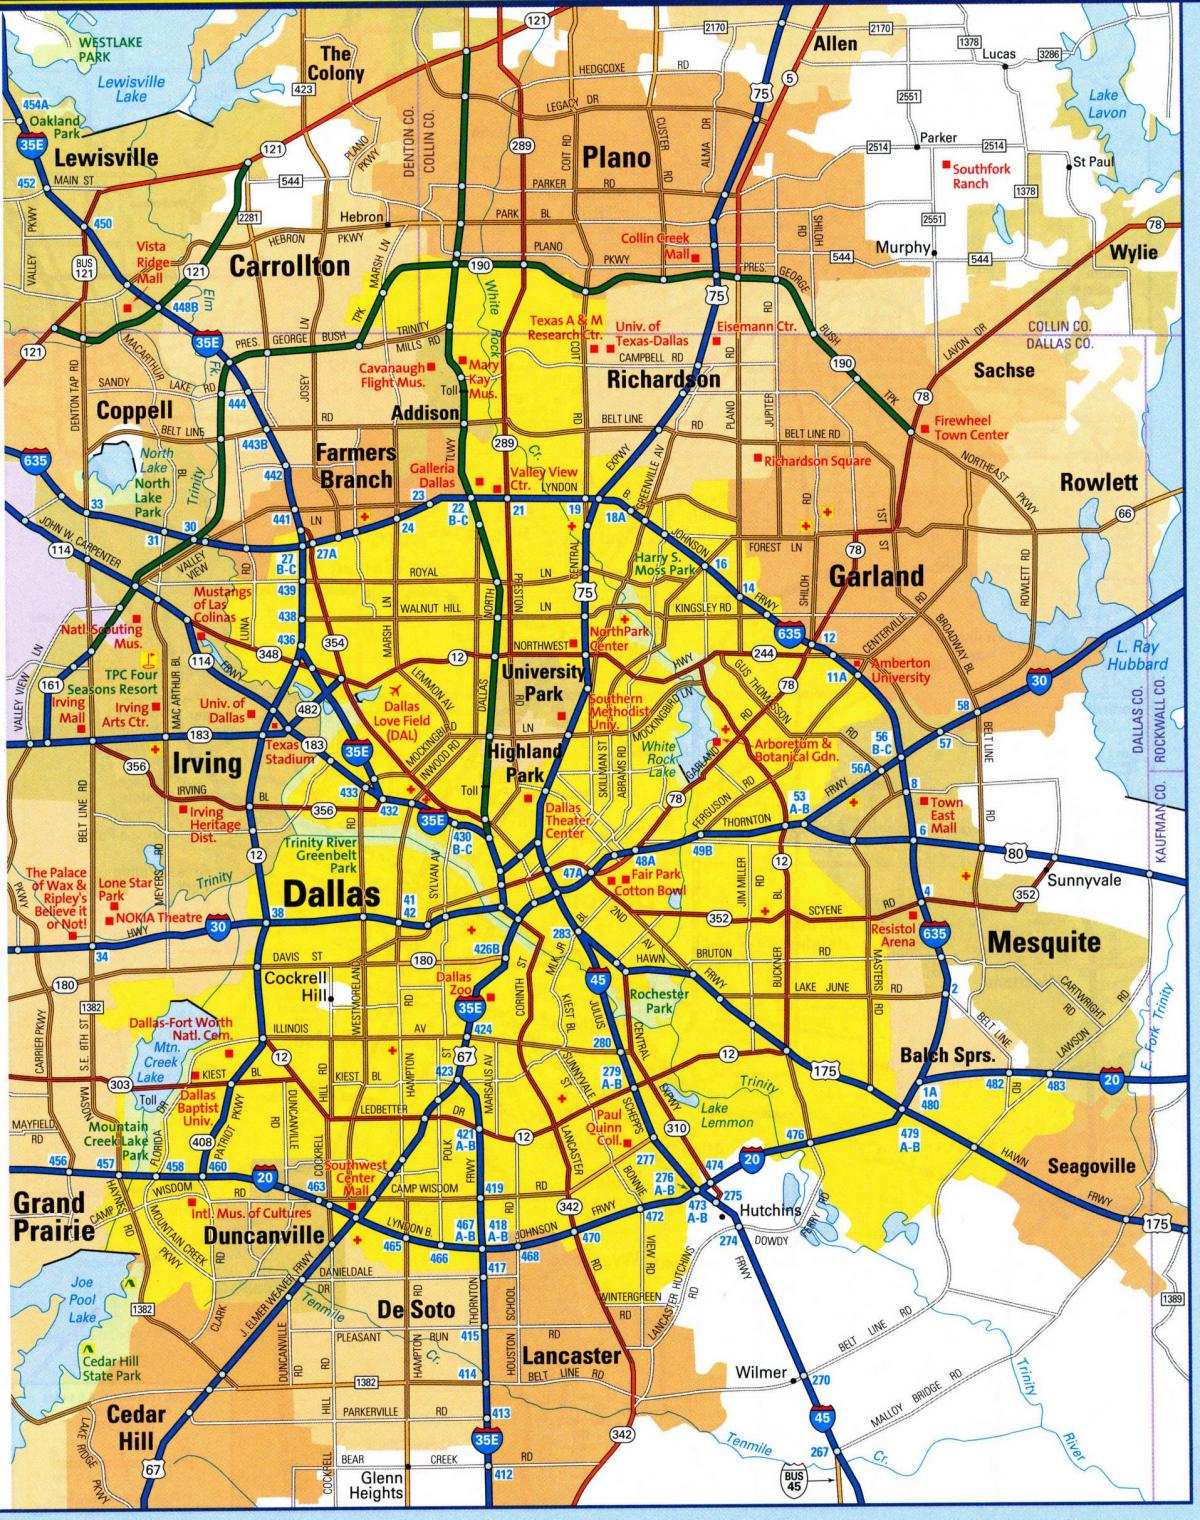 Plan de la ville de Dallas